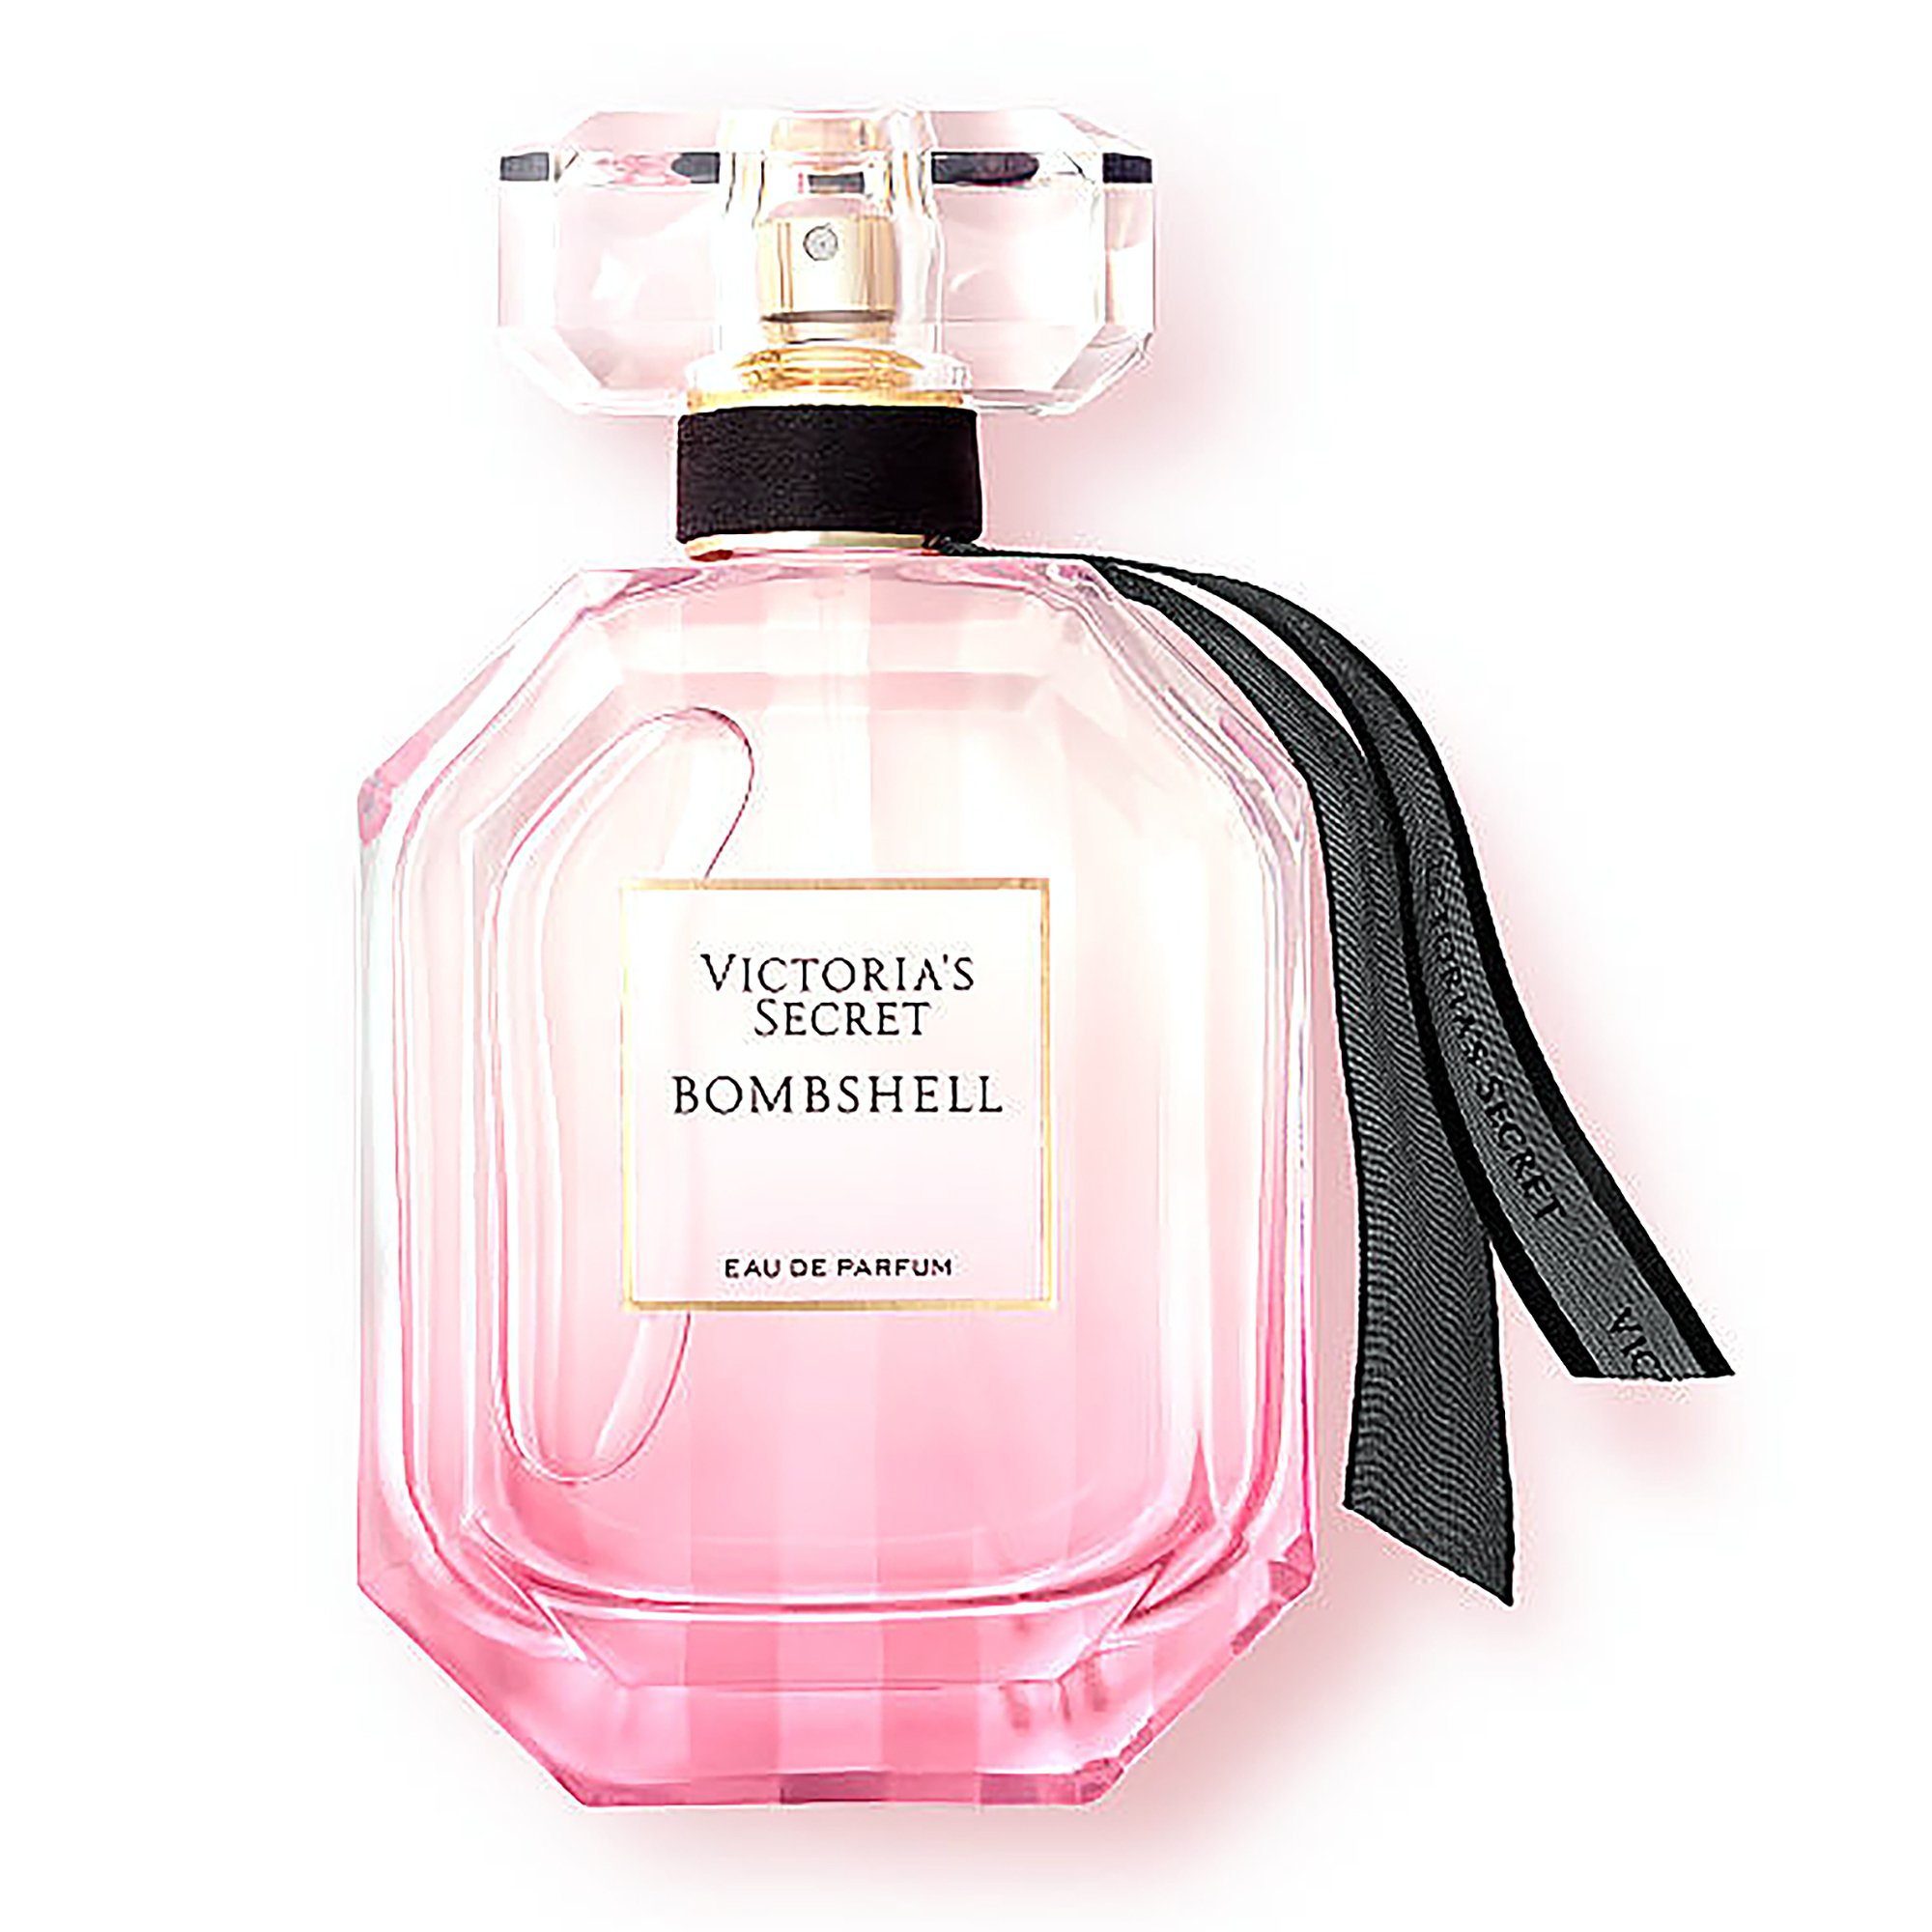 Victoria's Secret Bombshell Eau De Parfum | Perfume | Beauty & Personal ...